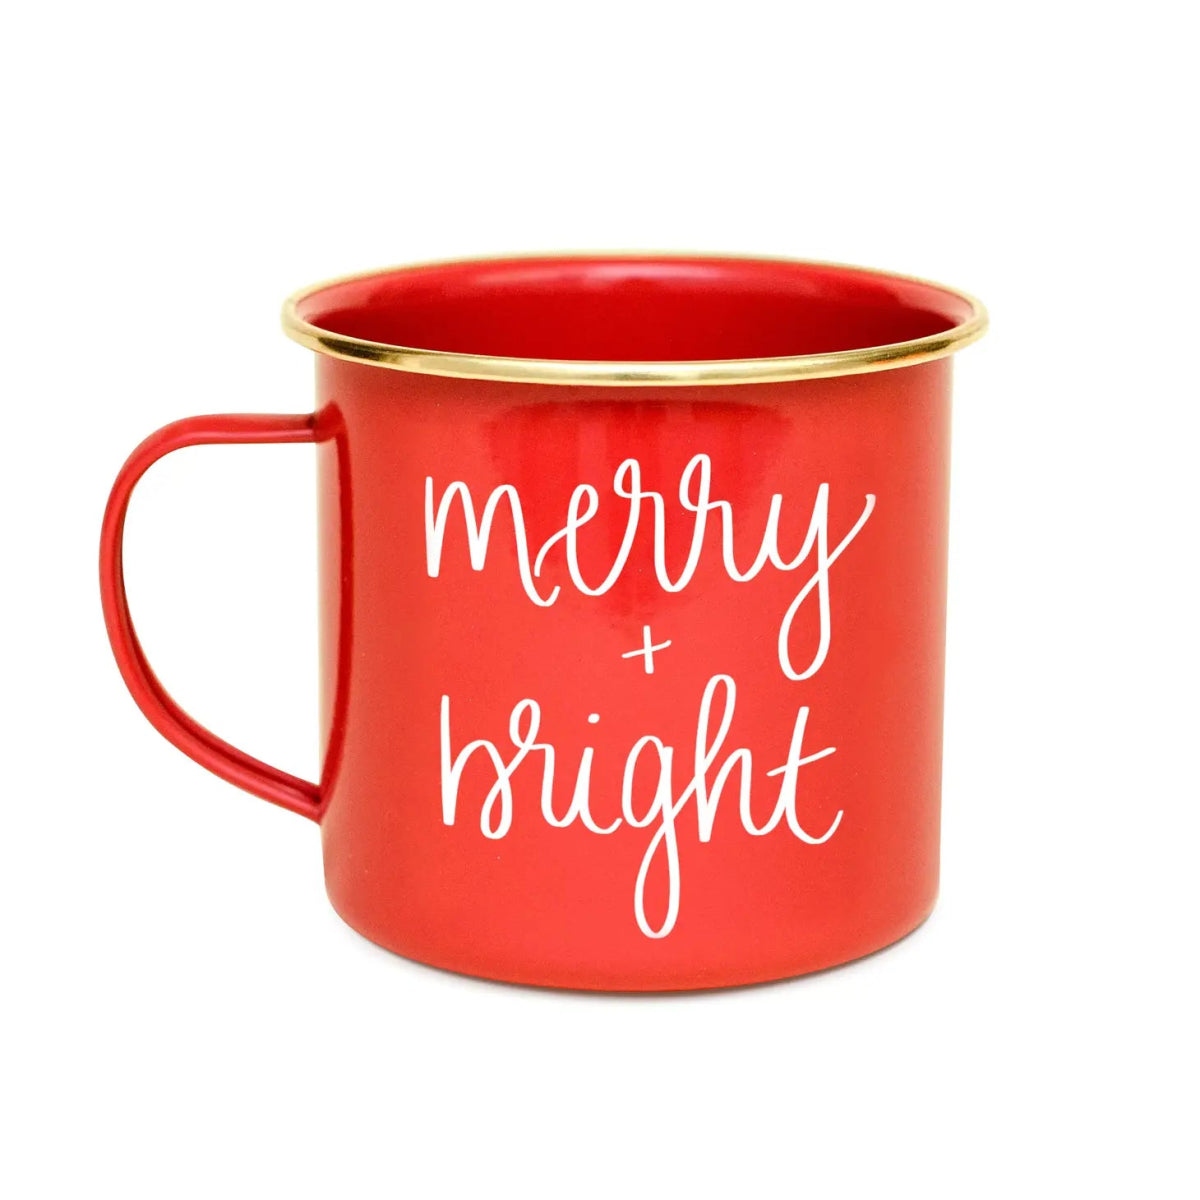 Merry and Bright Coffee Mug - Christmas Home Decor & Gifts - Mindful Living Home